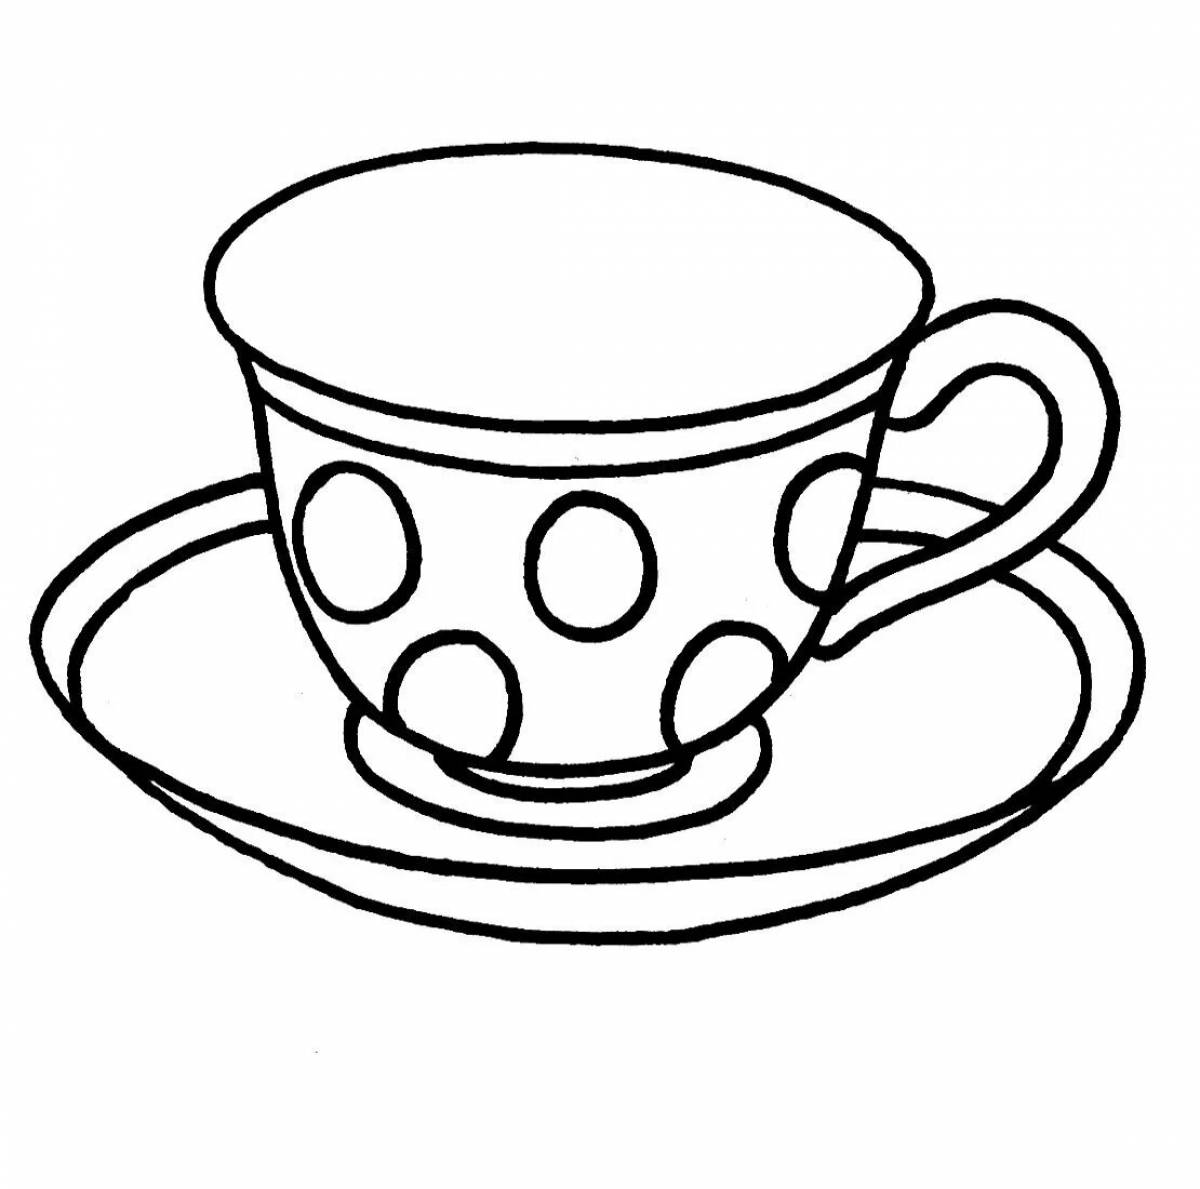 Polka dot mug #7